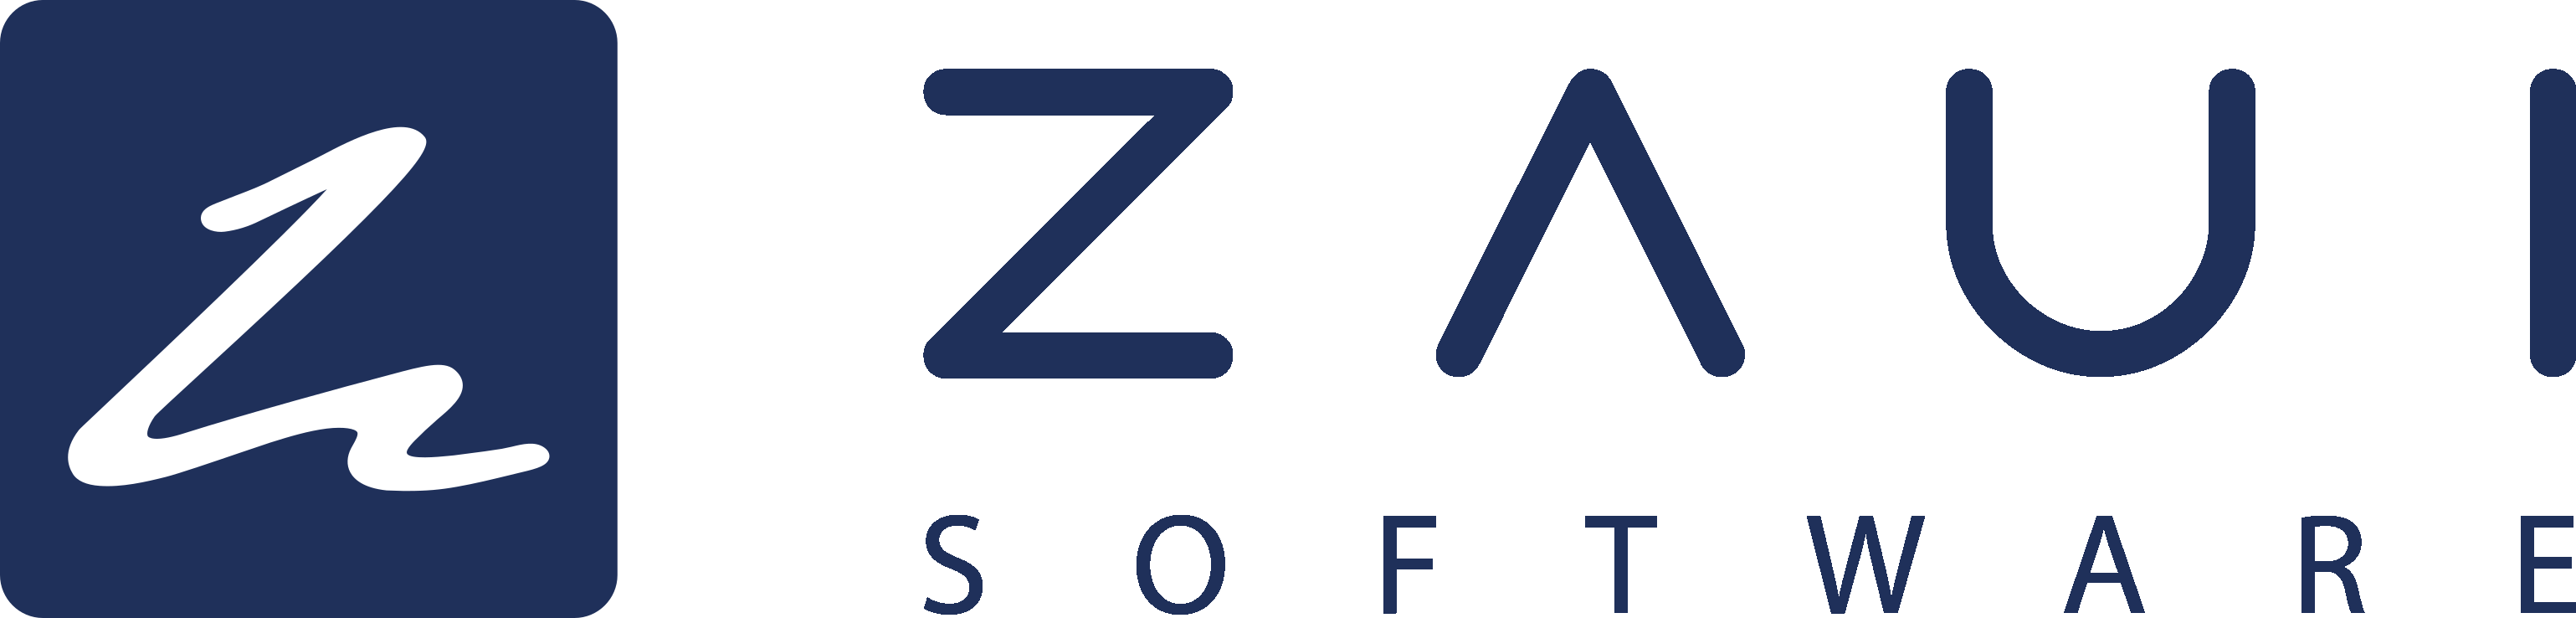 Zaui Software